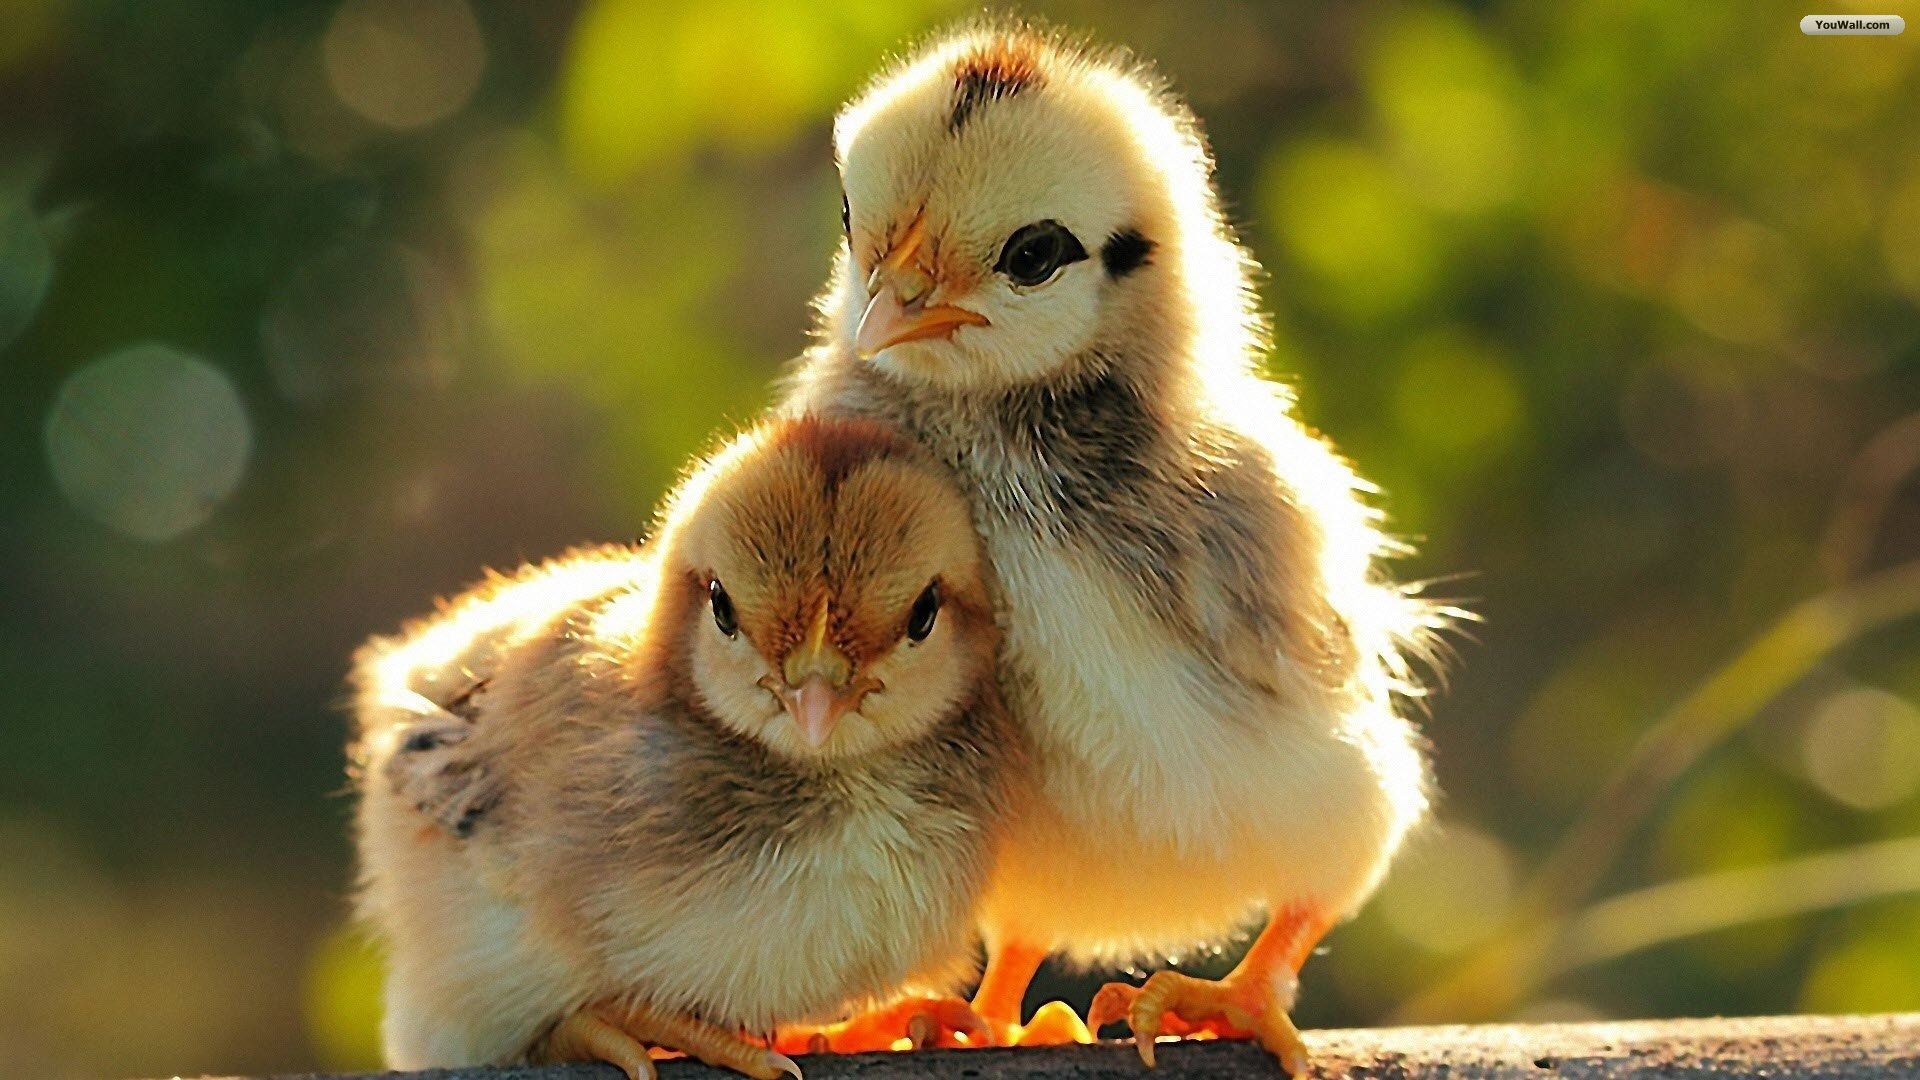 Little Chickens Wallpaper. Pet birds, Cute chickens, Cute animals